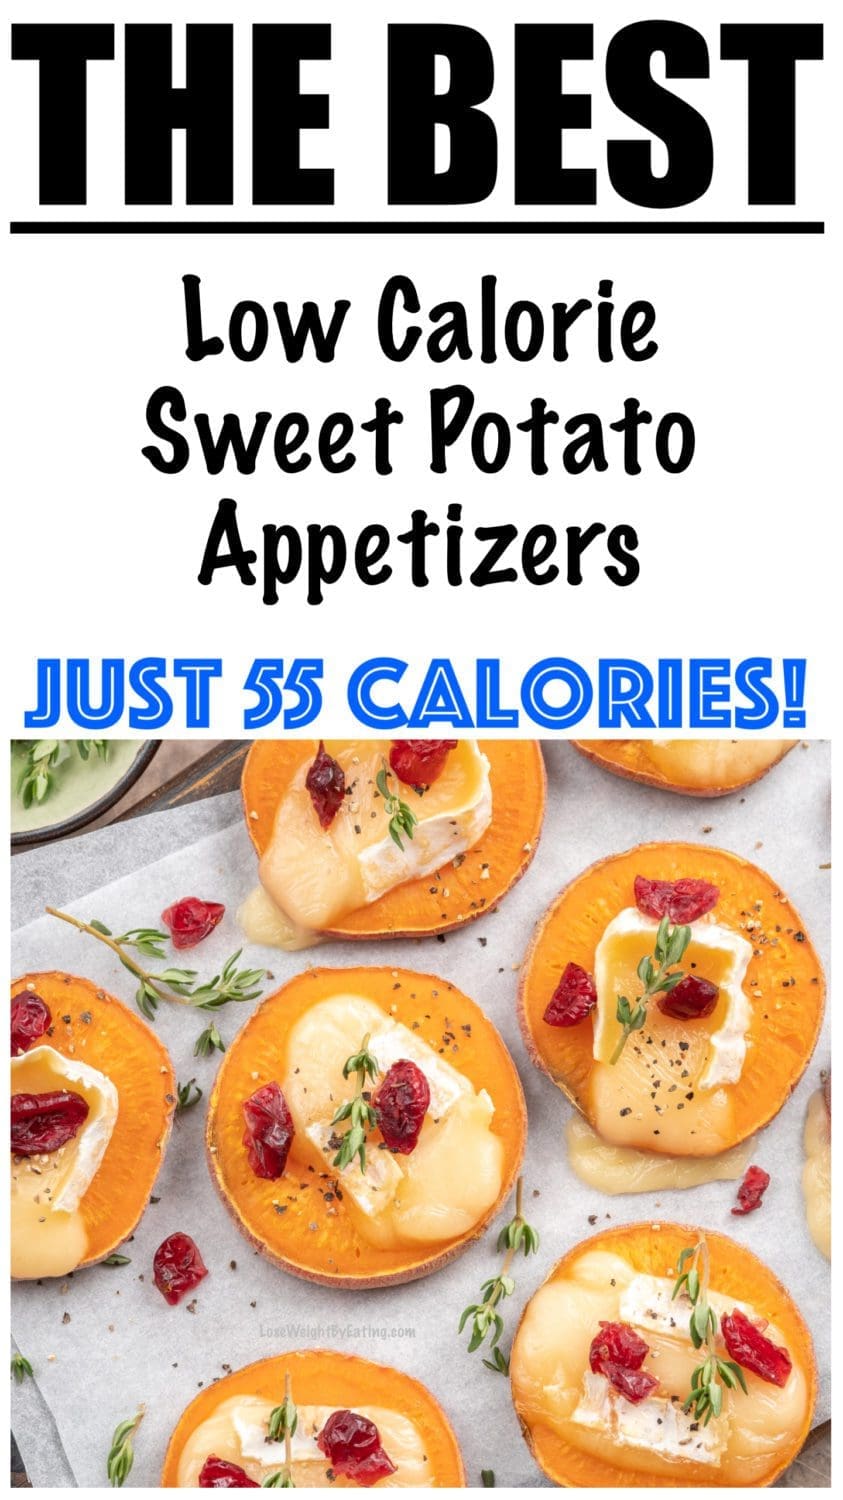 Sweet Potato Appetizers
